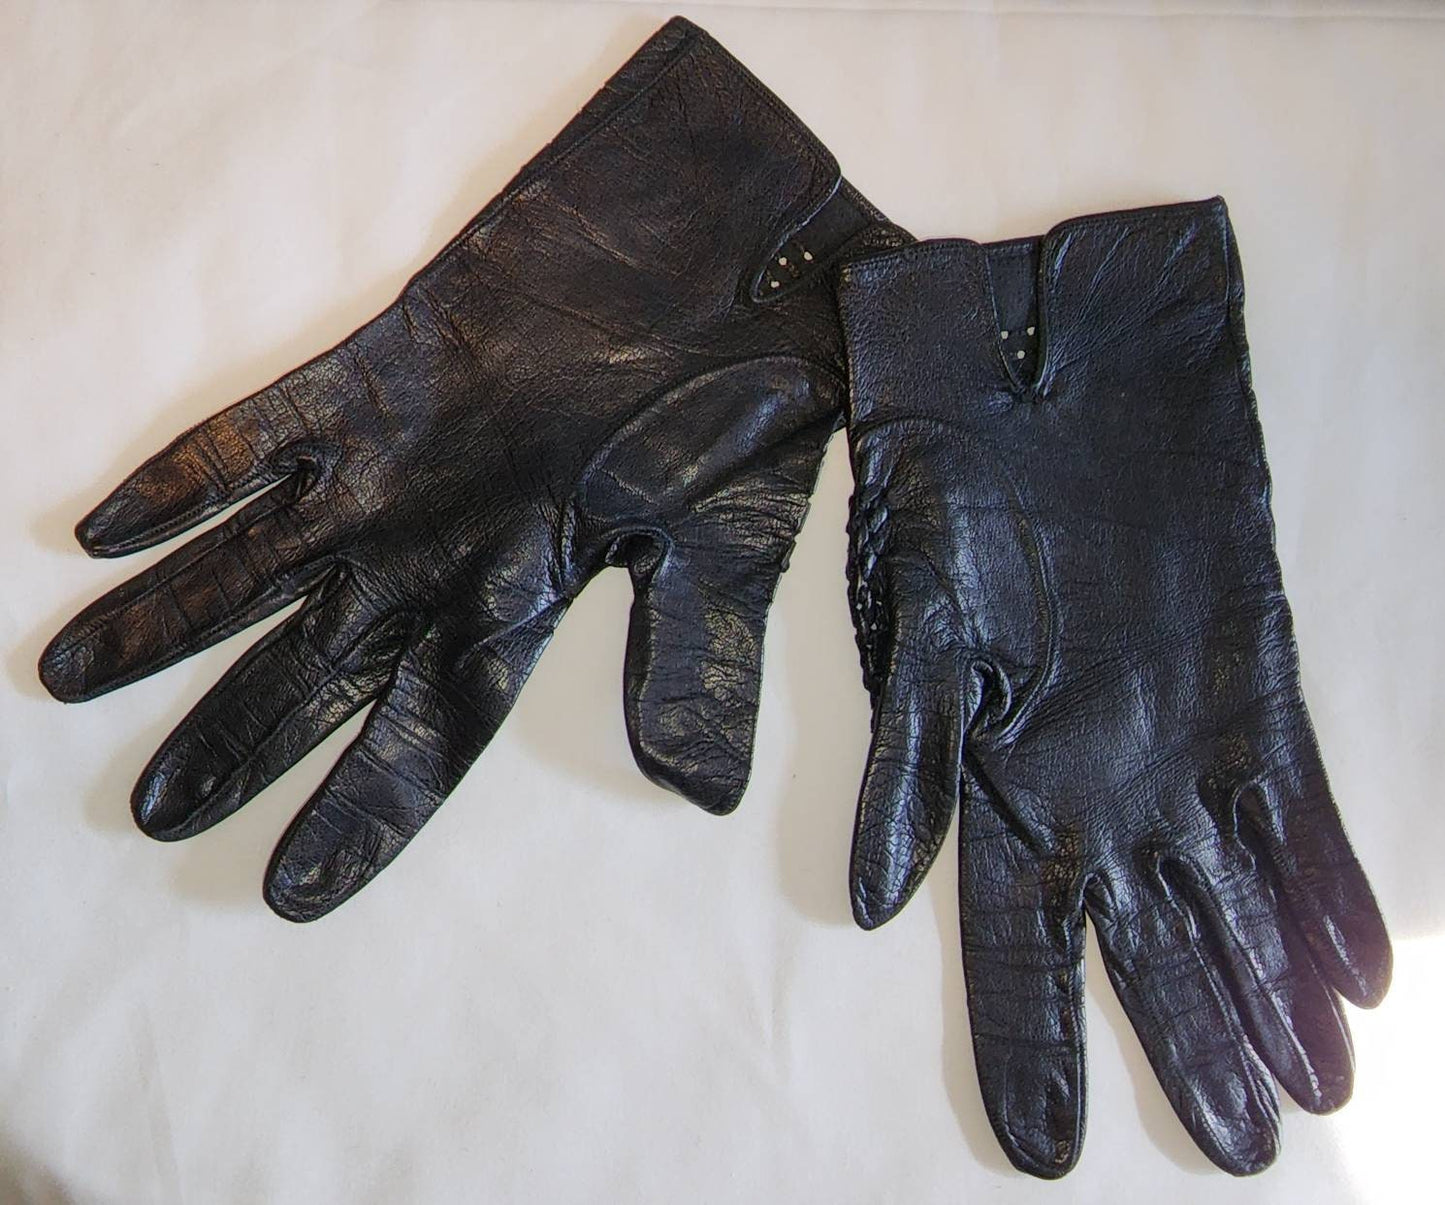 Vintage Leather Gloves 1960s 70s Thin Black Leather Basketweave Wrist Gloves Mid Century Boho S M